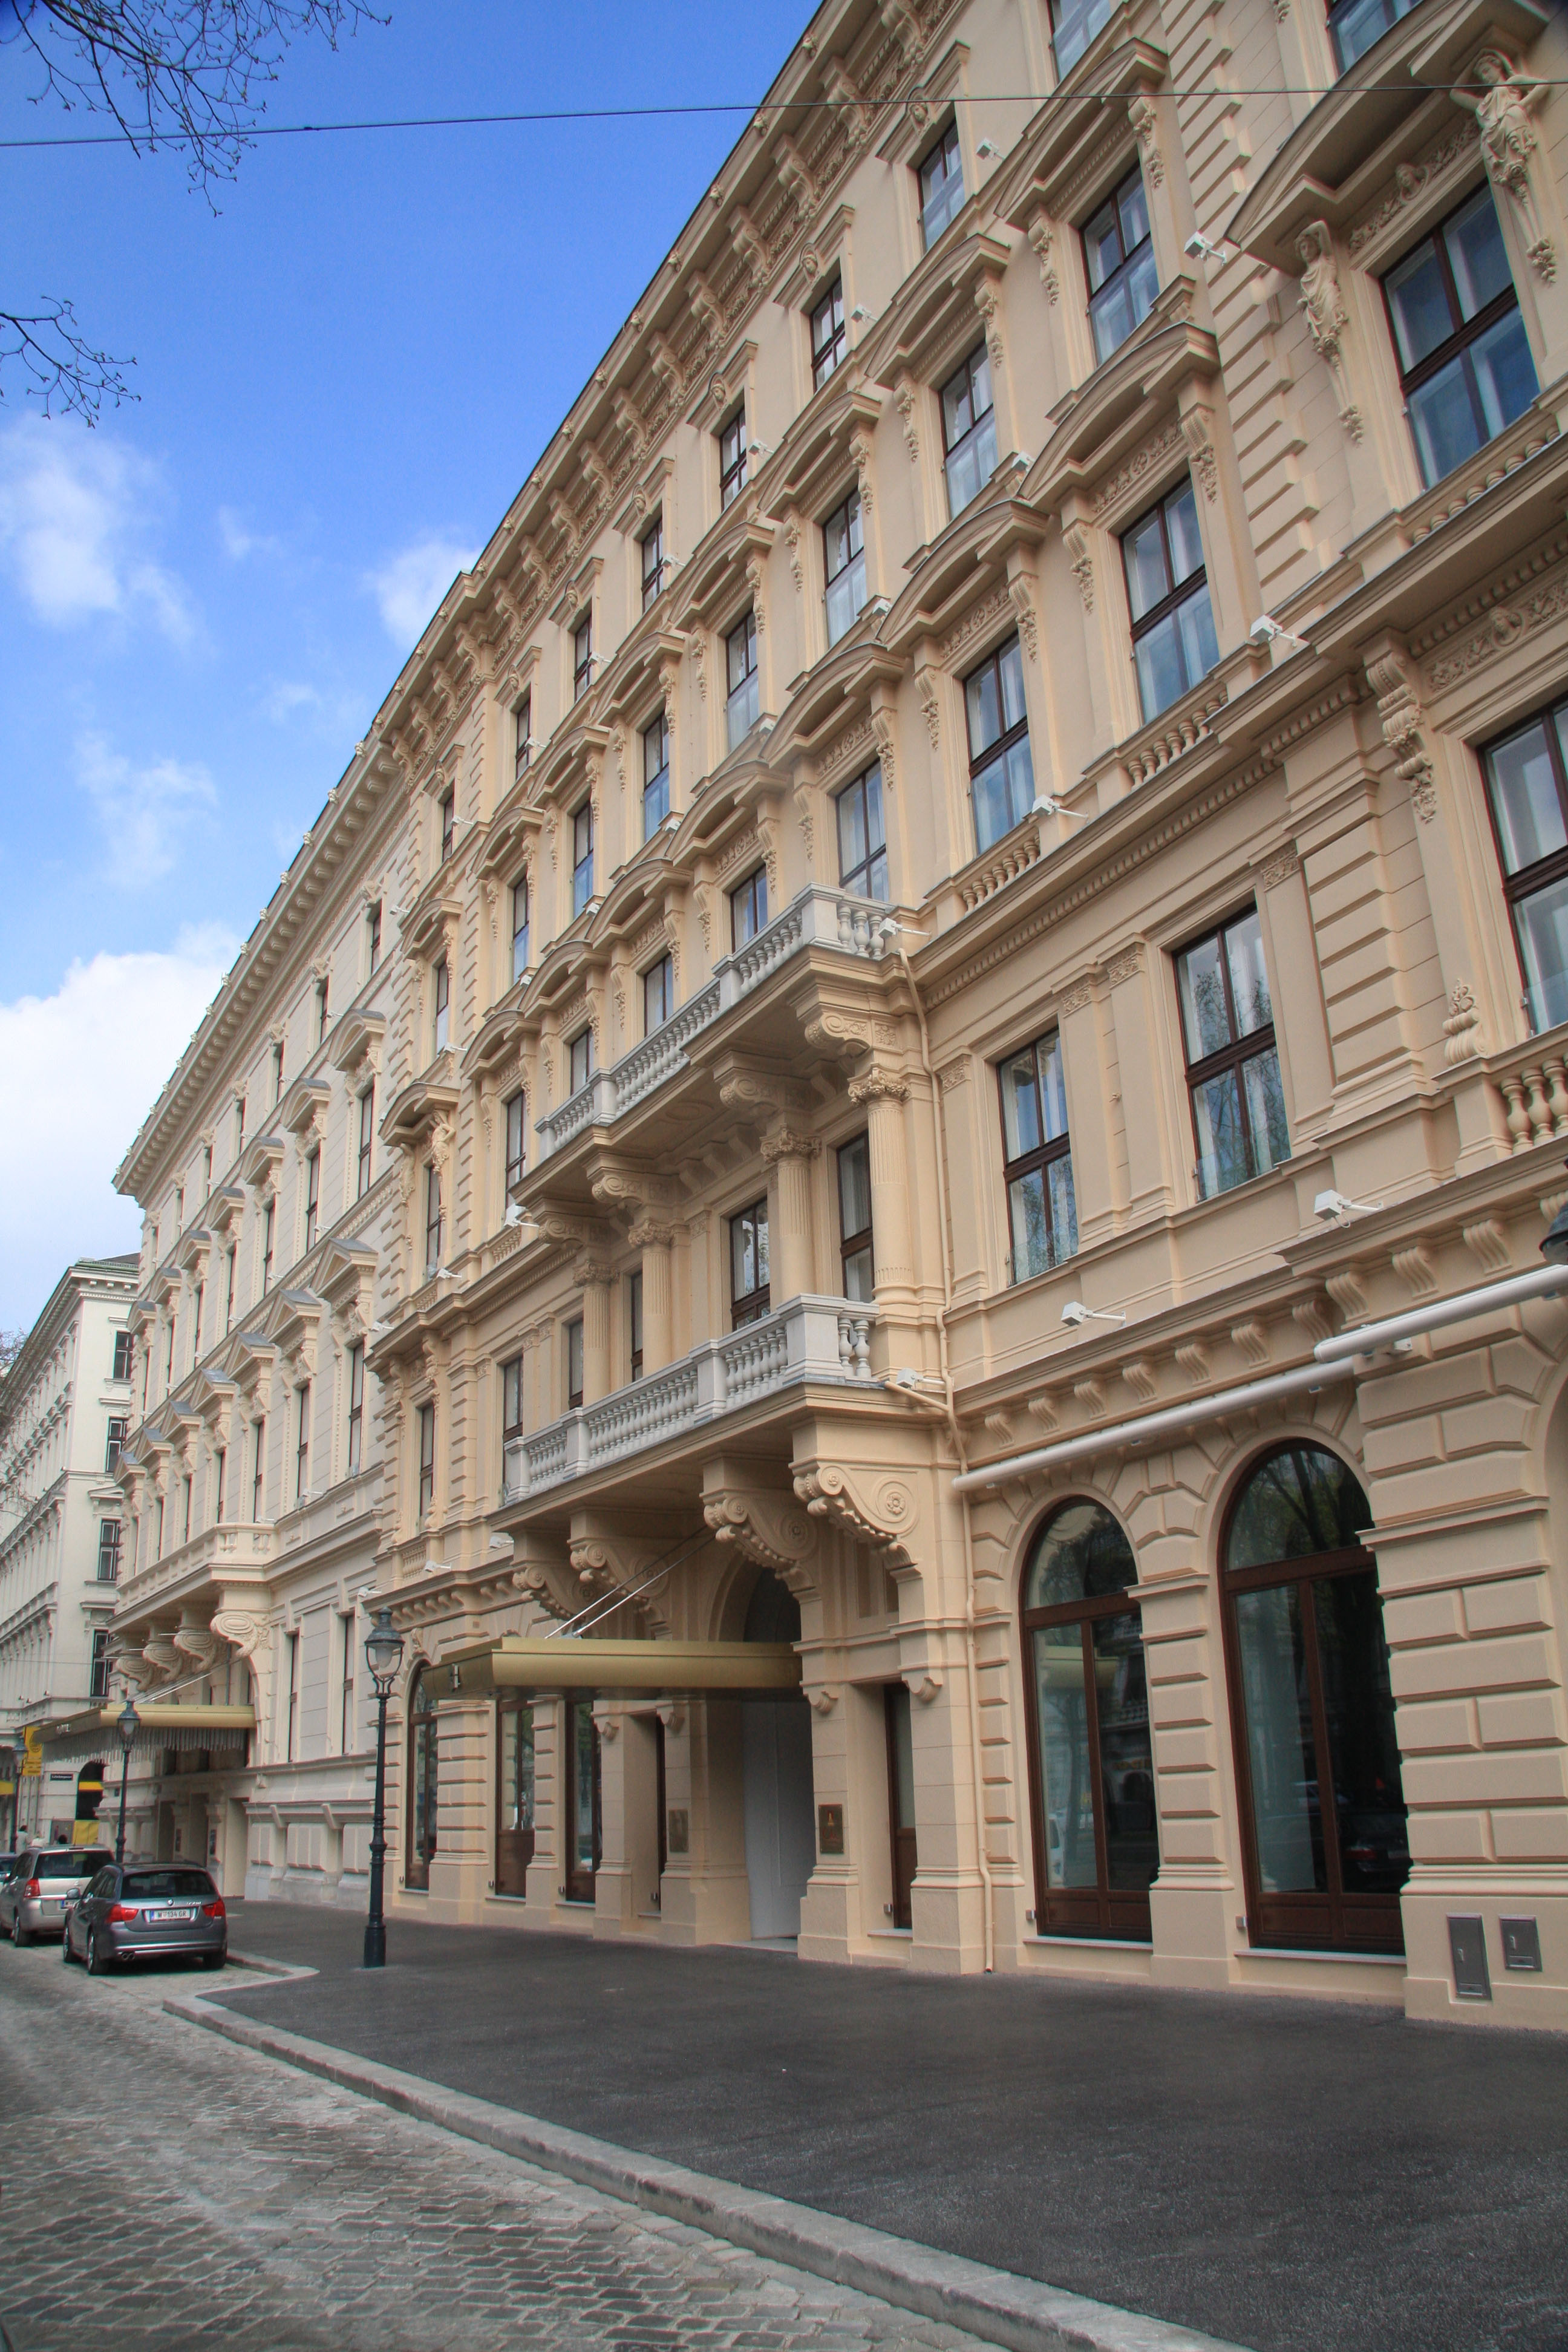 Hotel Ritz Carlton Schubertring - Budownictwo lądowe naziemne